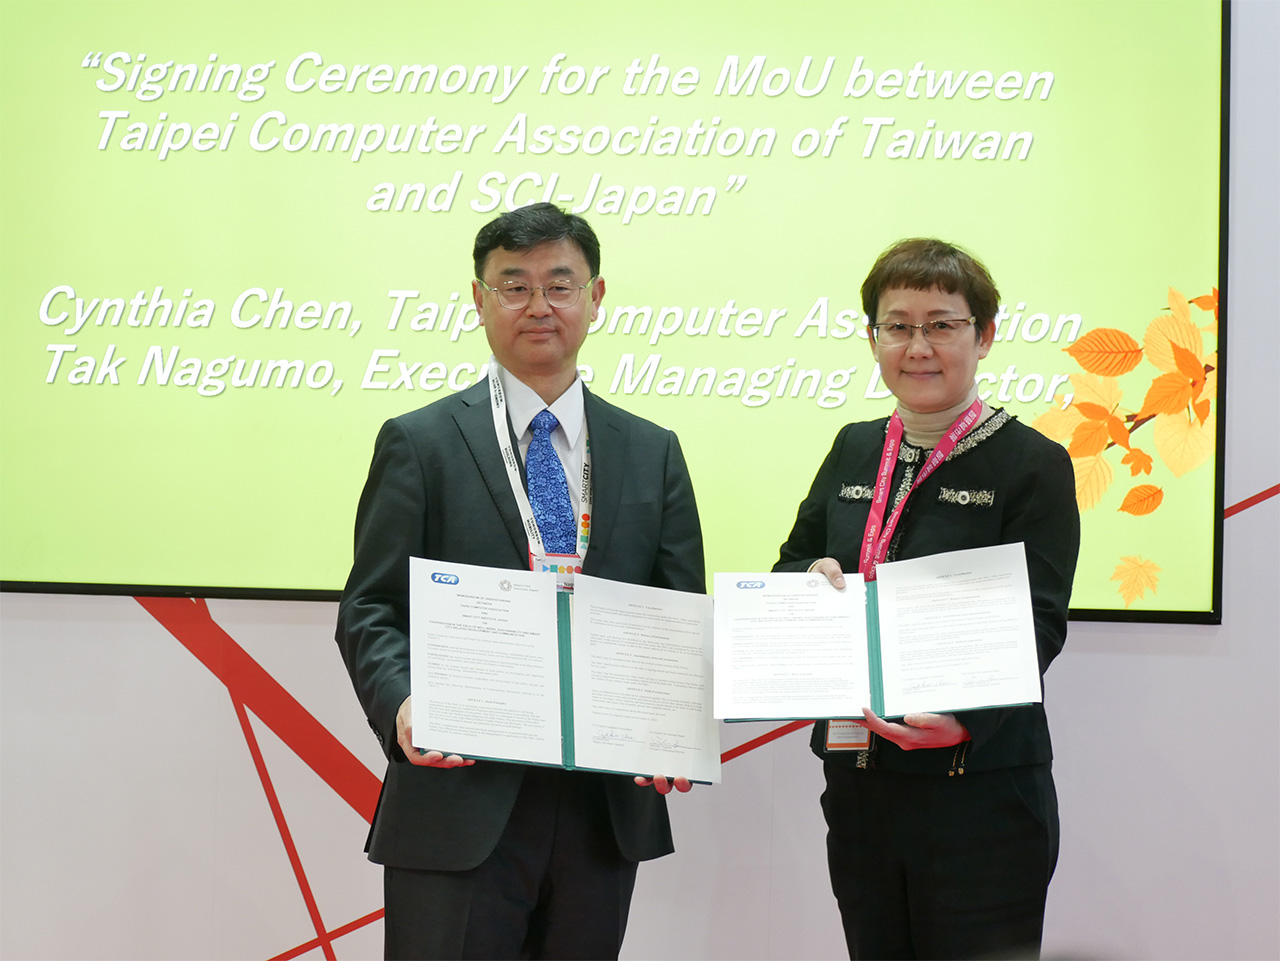 Memorandum of Understanding signed with Taiwan’s Taipei Computer Association